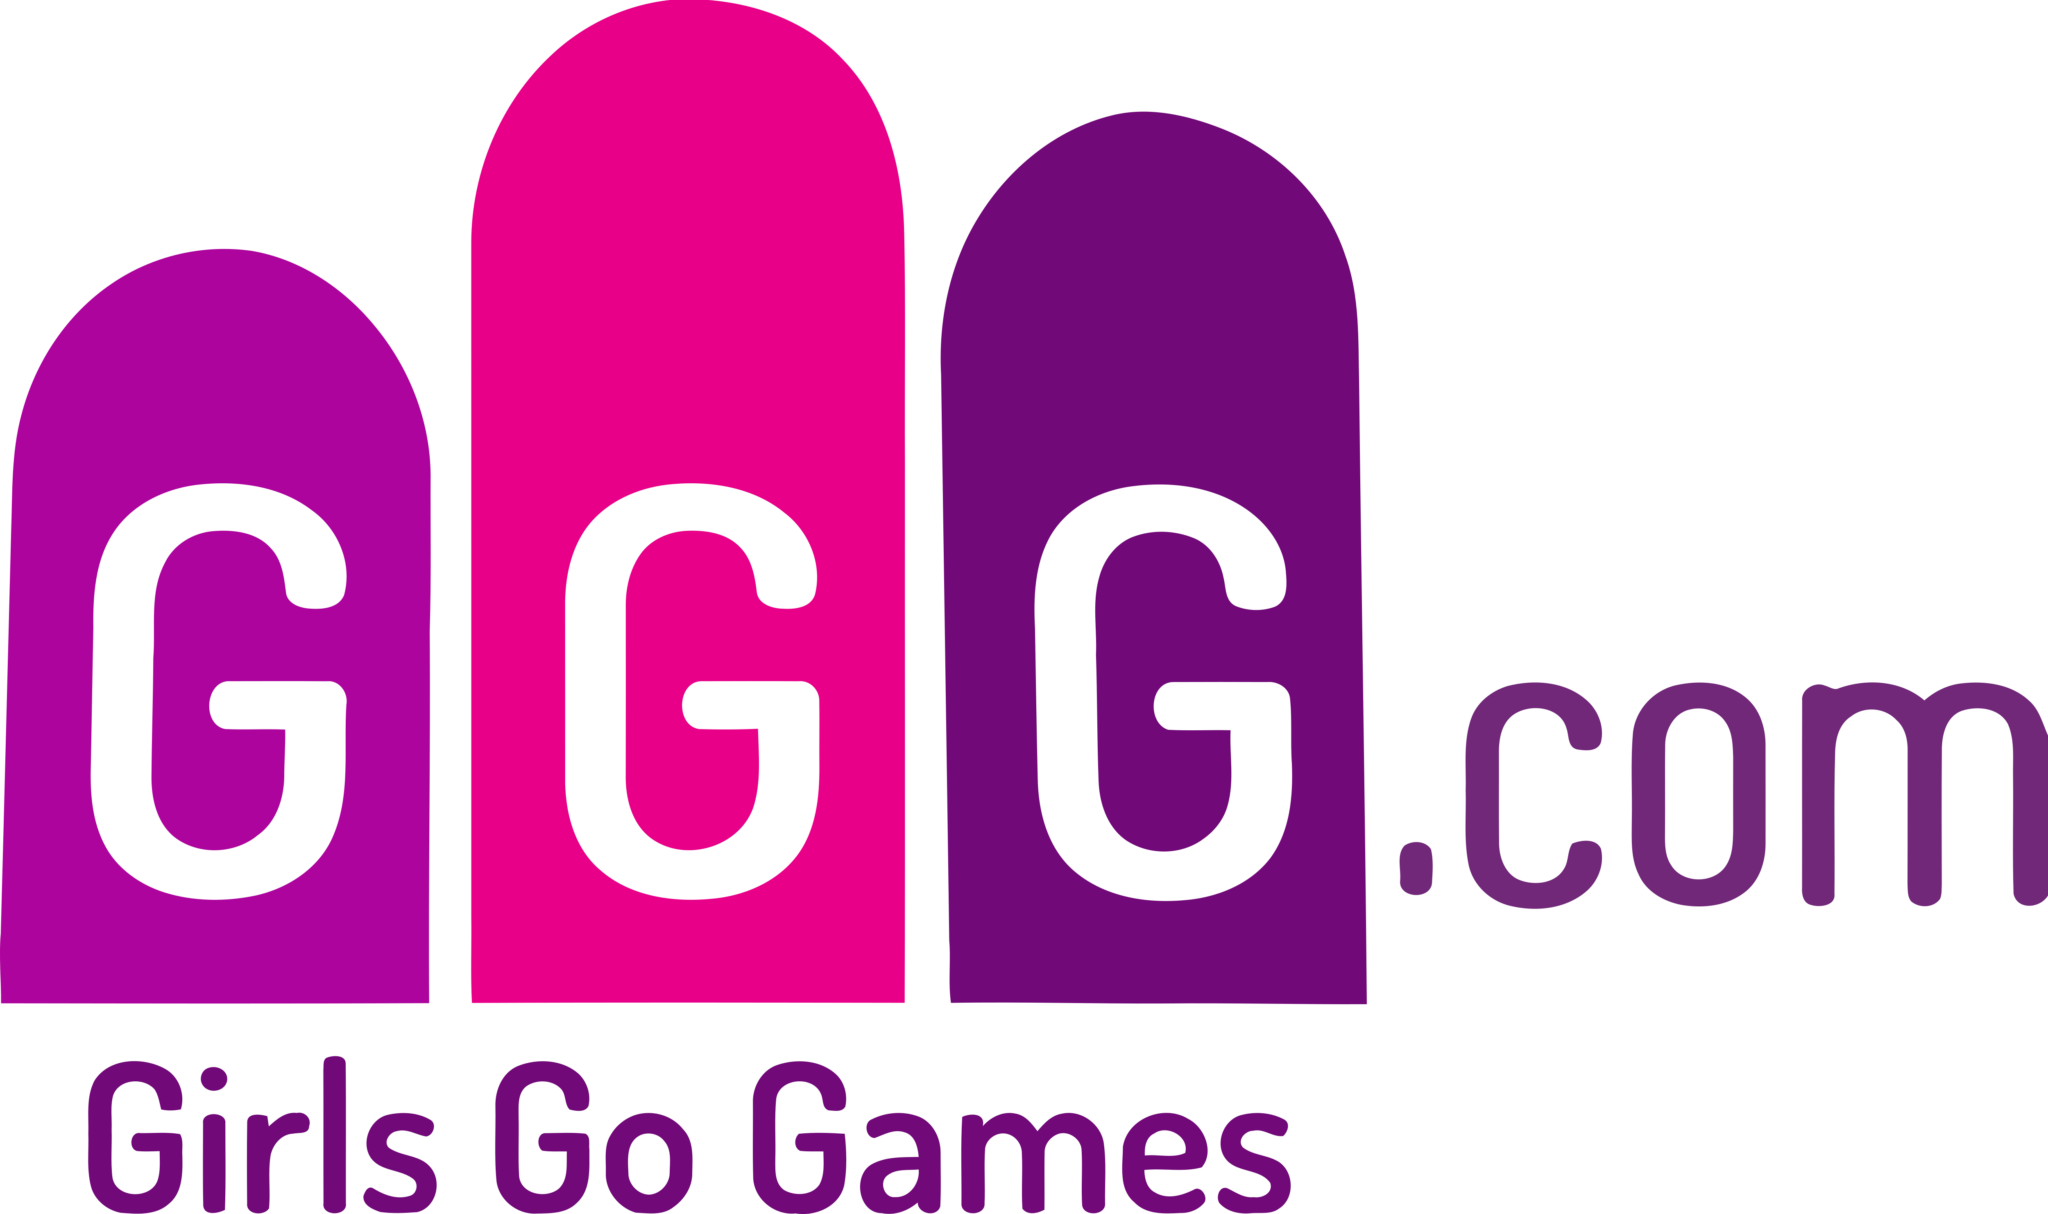 Go girls tv. Гёрл гоу геймс. Ggg.com. Игры ggg. Girls go games.